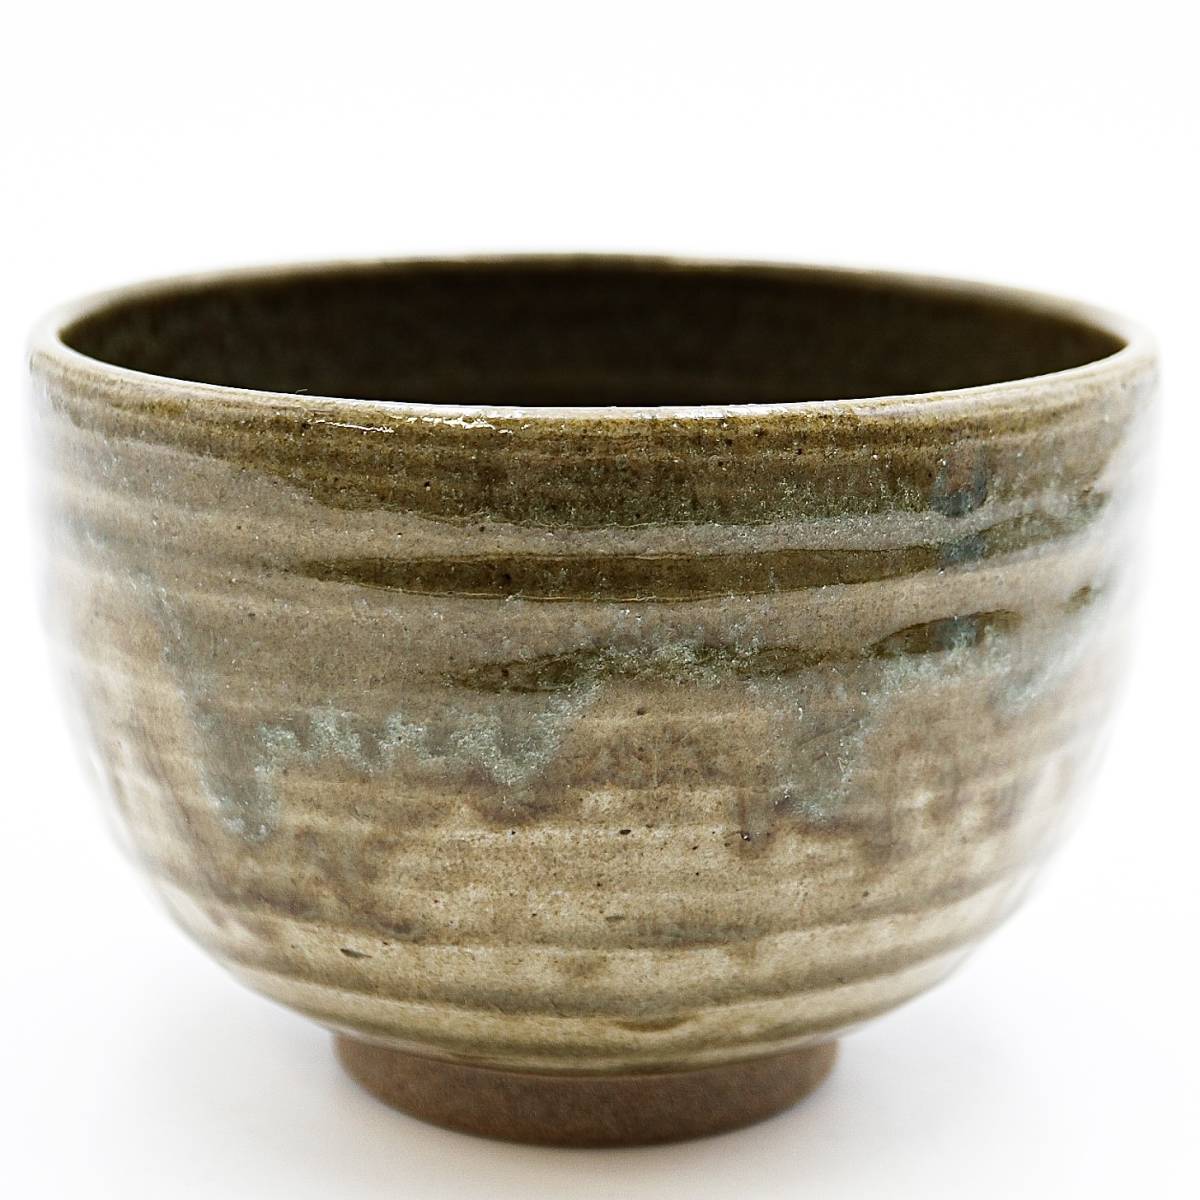 雑誌で紹介された 志野茶碗 茶道具 古美術 骨董 時代物 志野焼 茶碗 